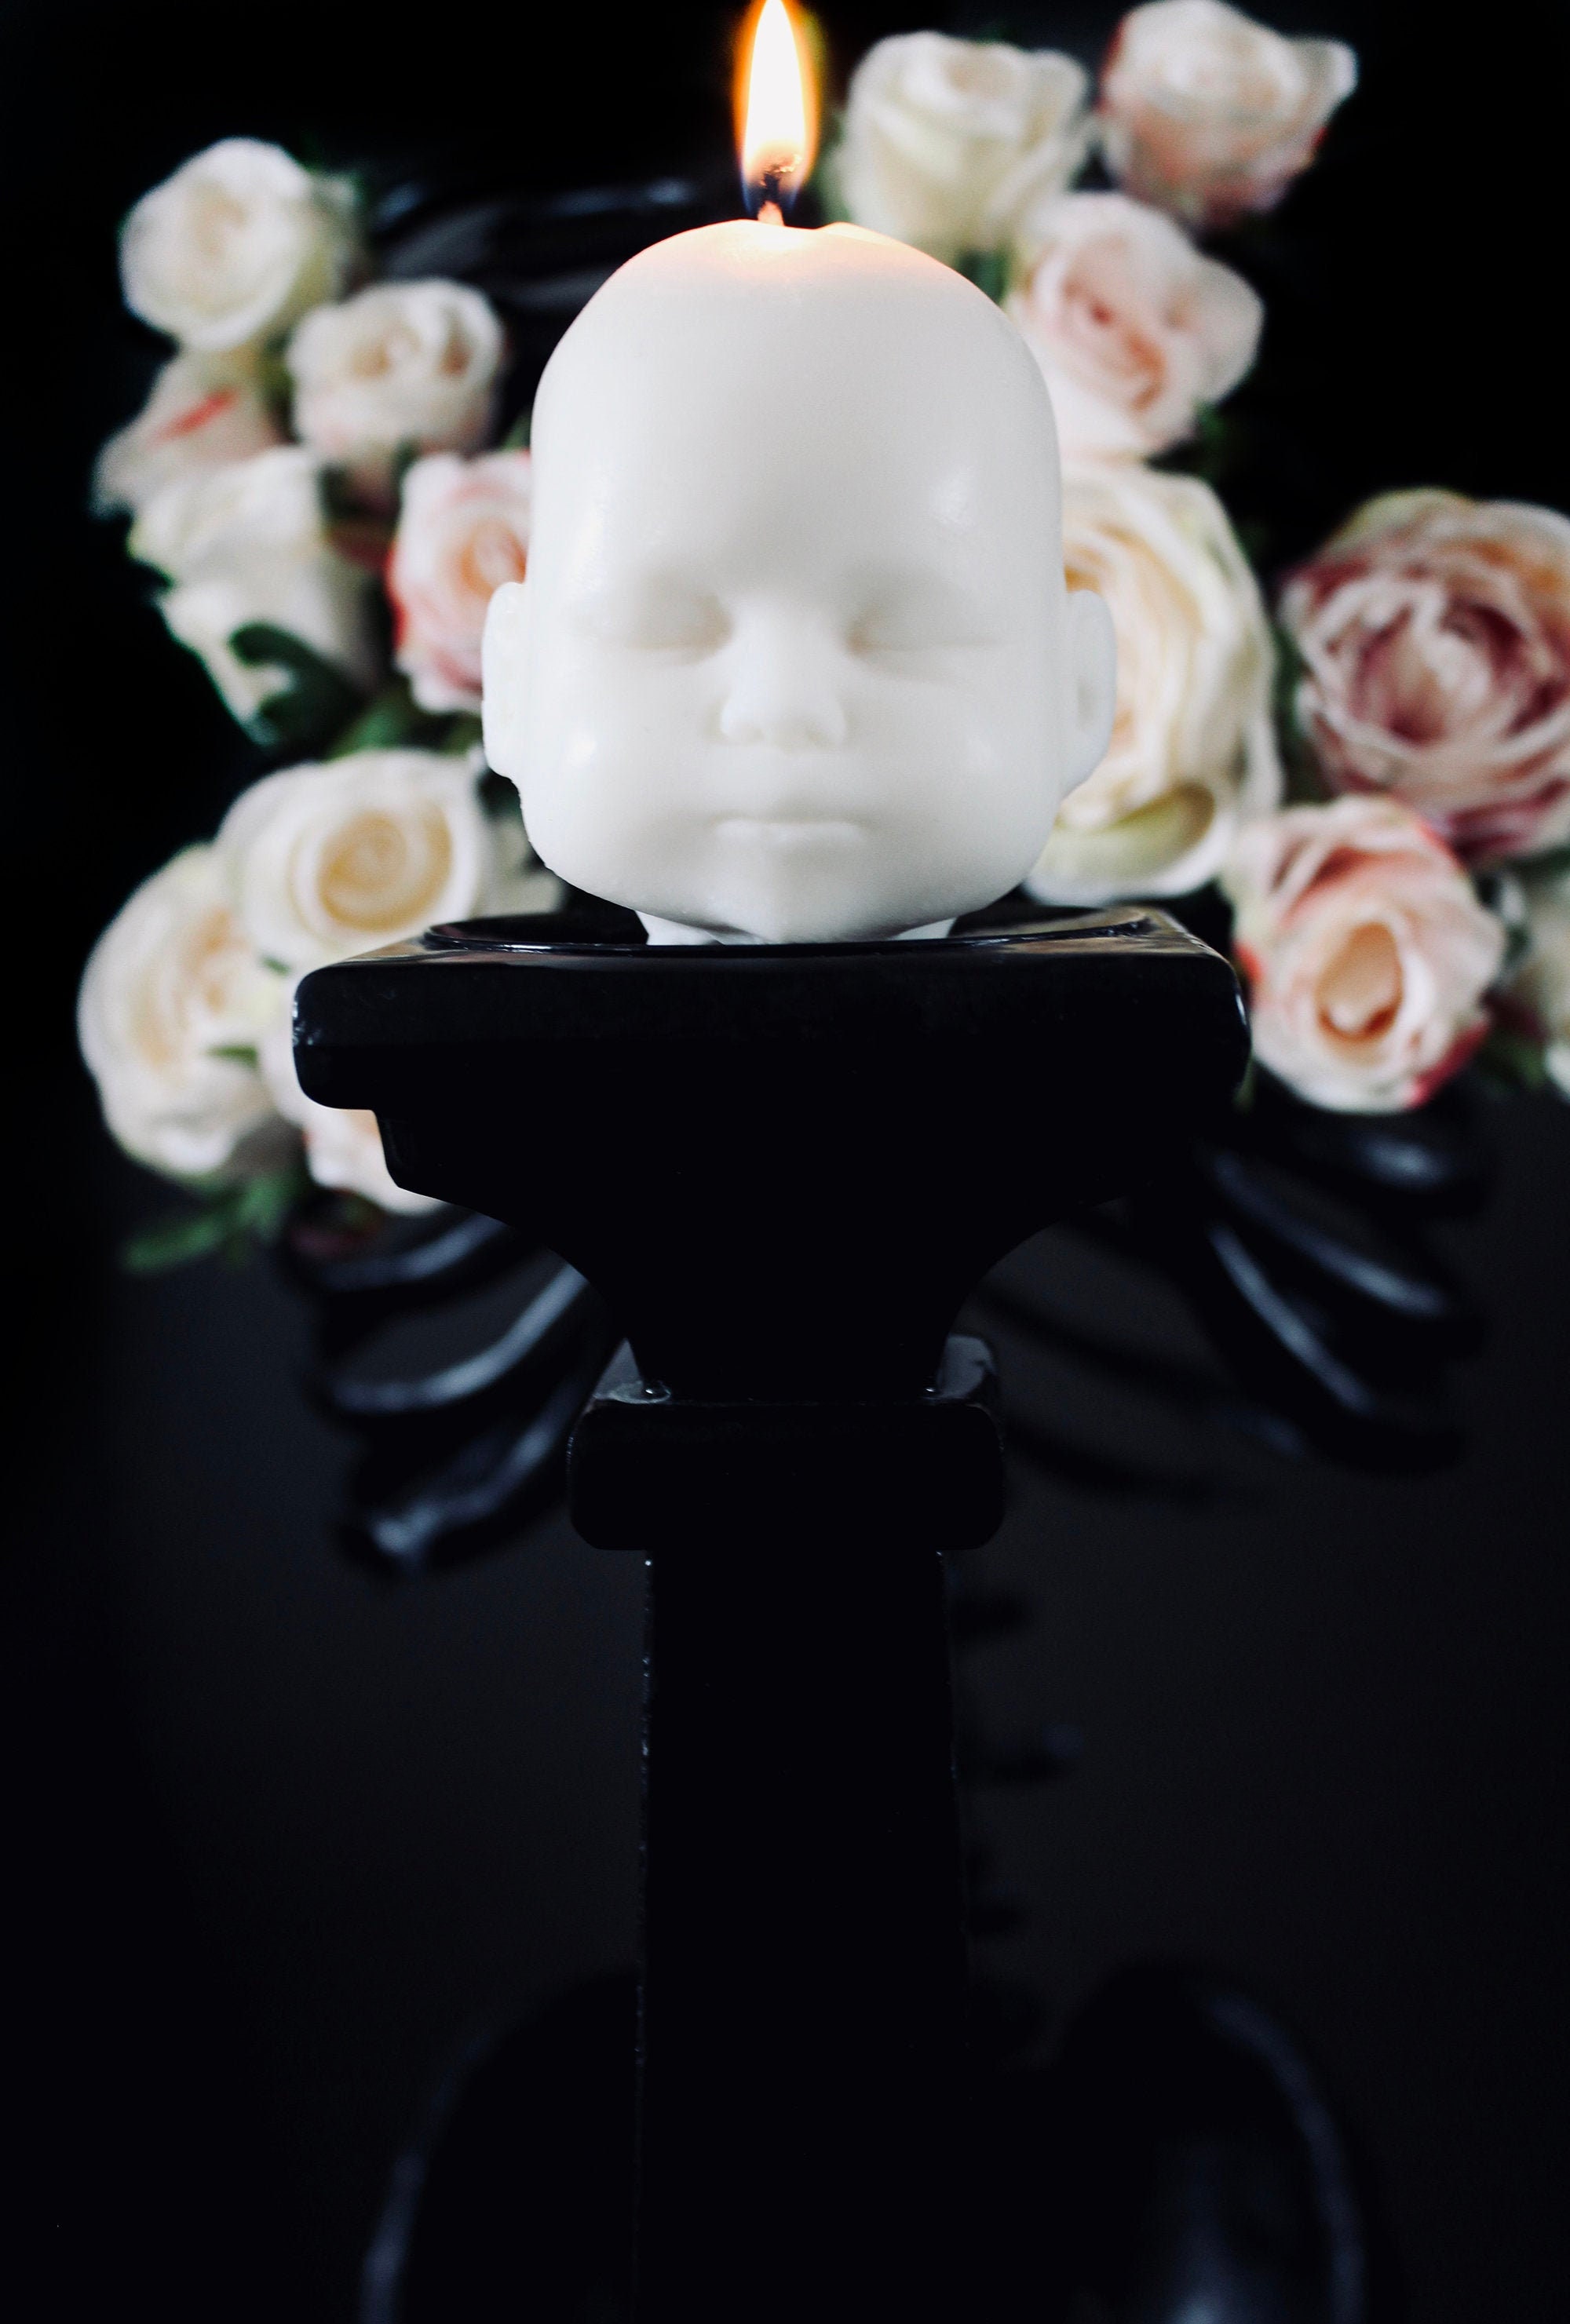 Little Joseph: A Creepy Doll Head Candle Holder